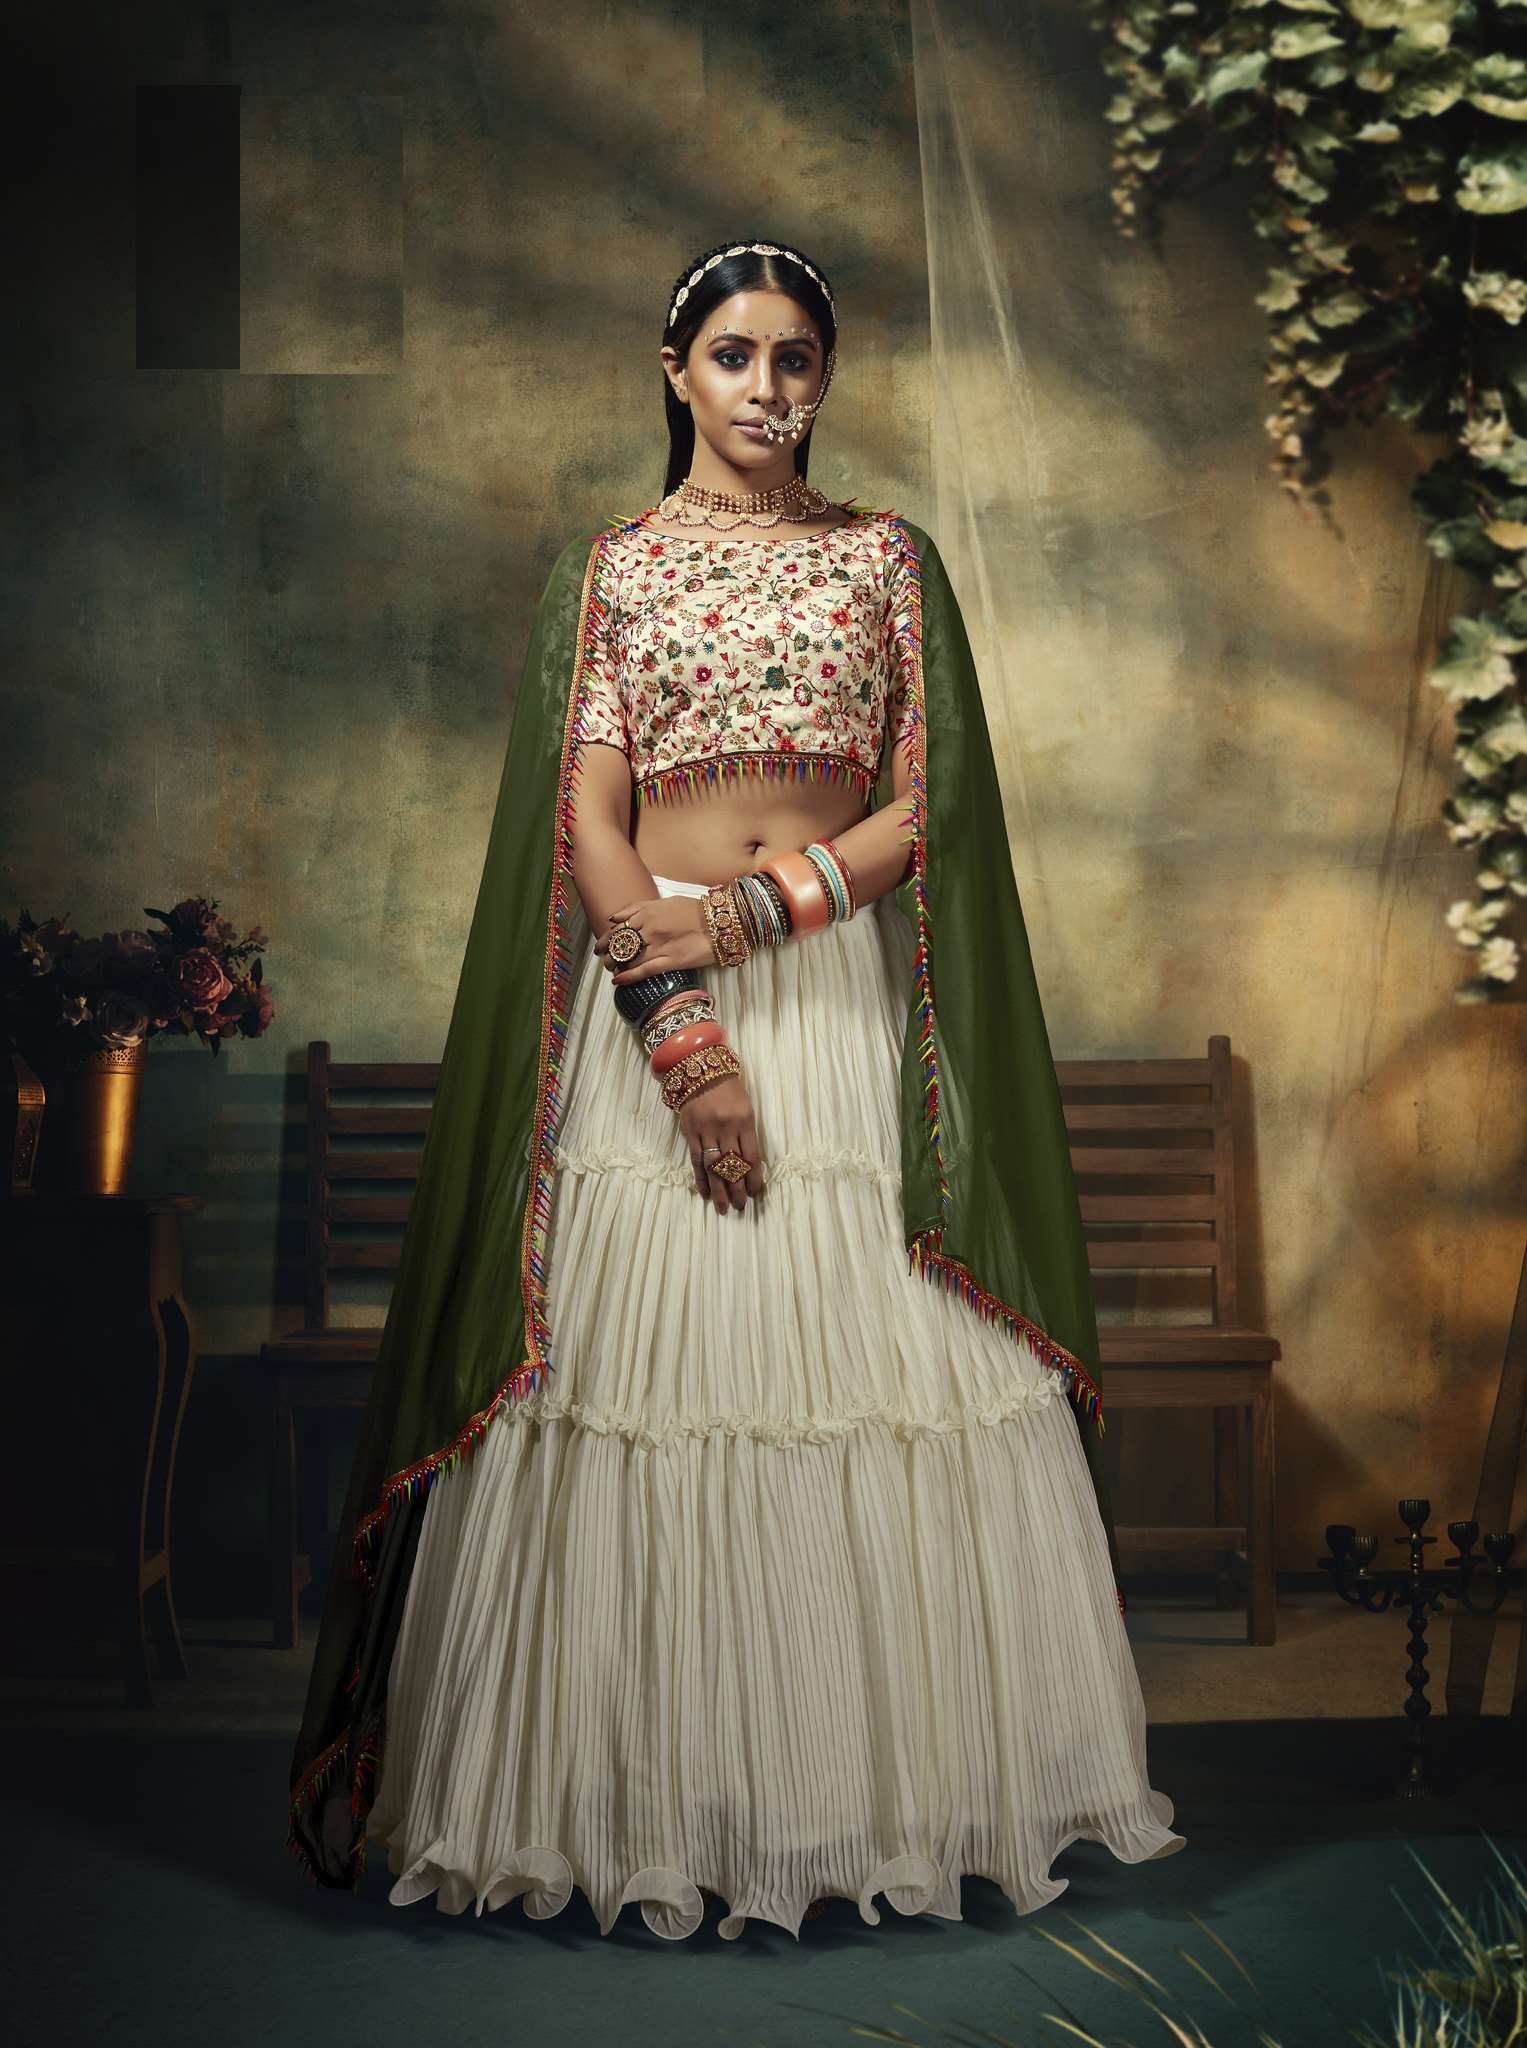 Attireme.com - Ladies Salwar Kameez | Designer Sarees | Lehanga Choli |  Indian outfits, Indo western dresses for women, Western dresses